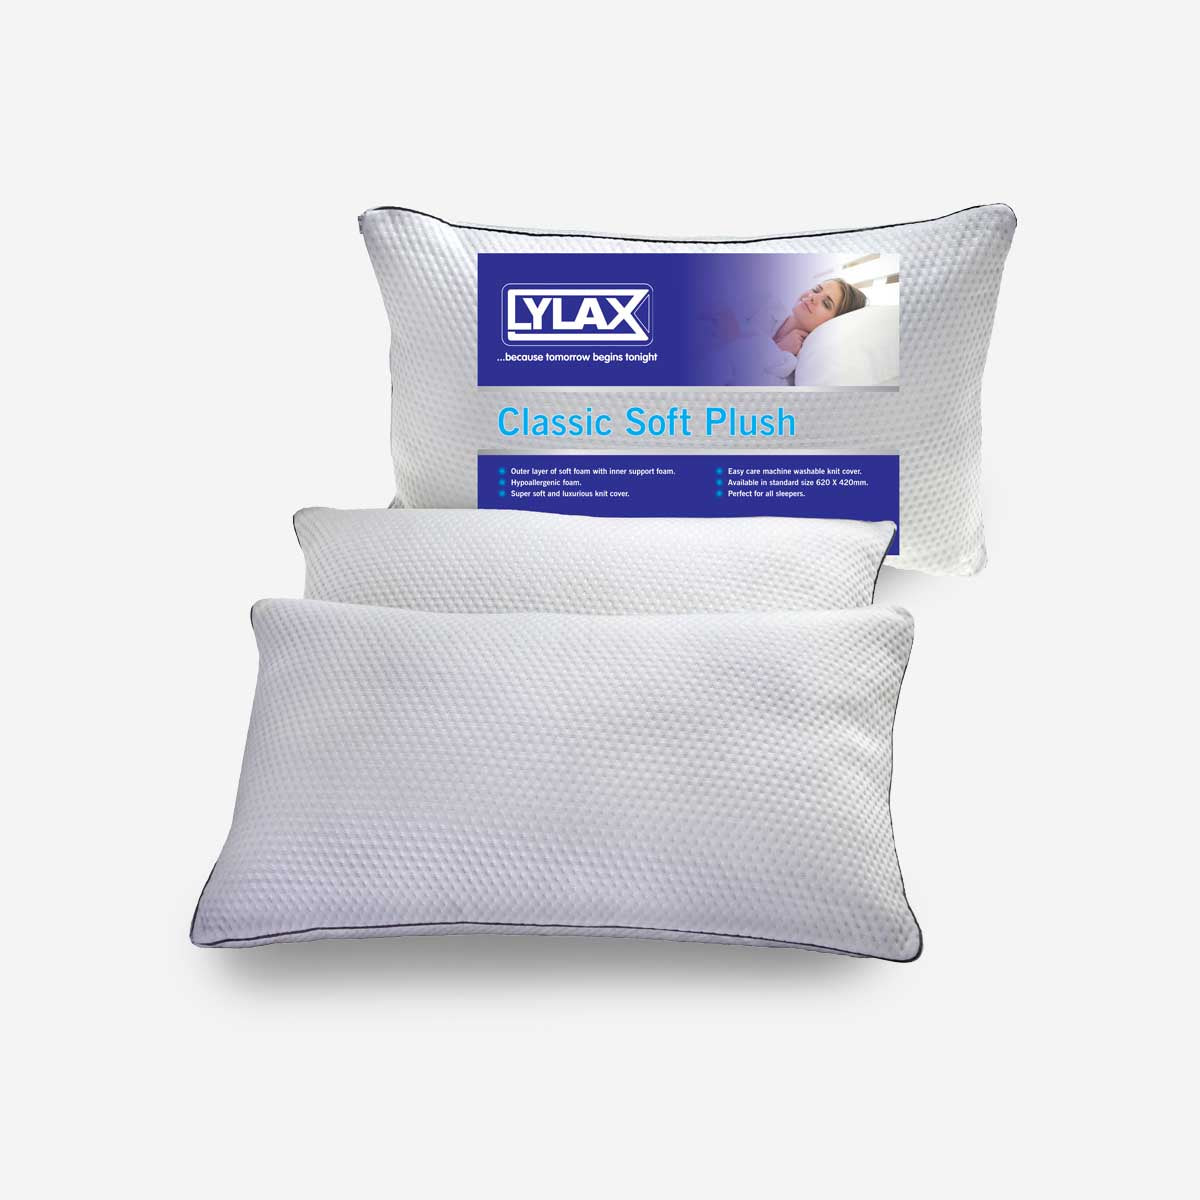 Classic Soft Plush Pillows